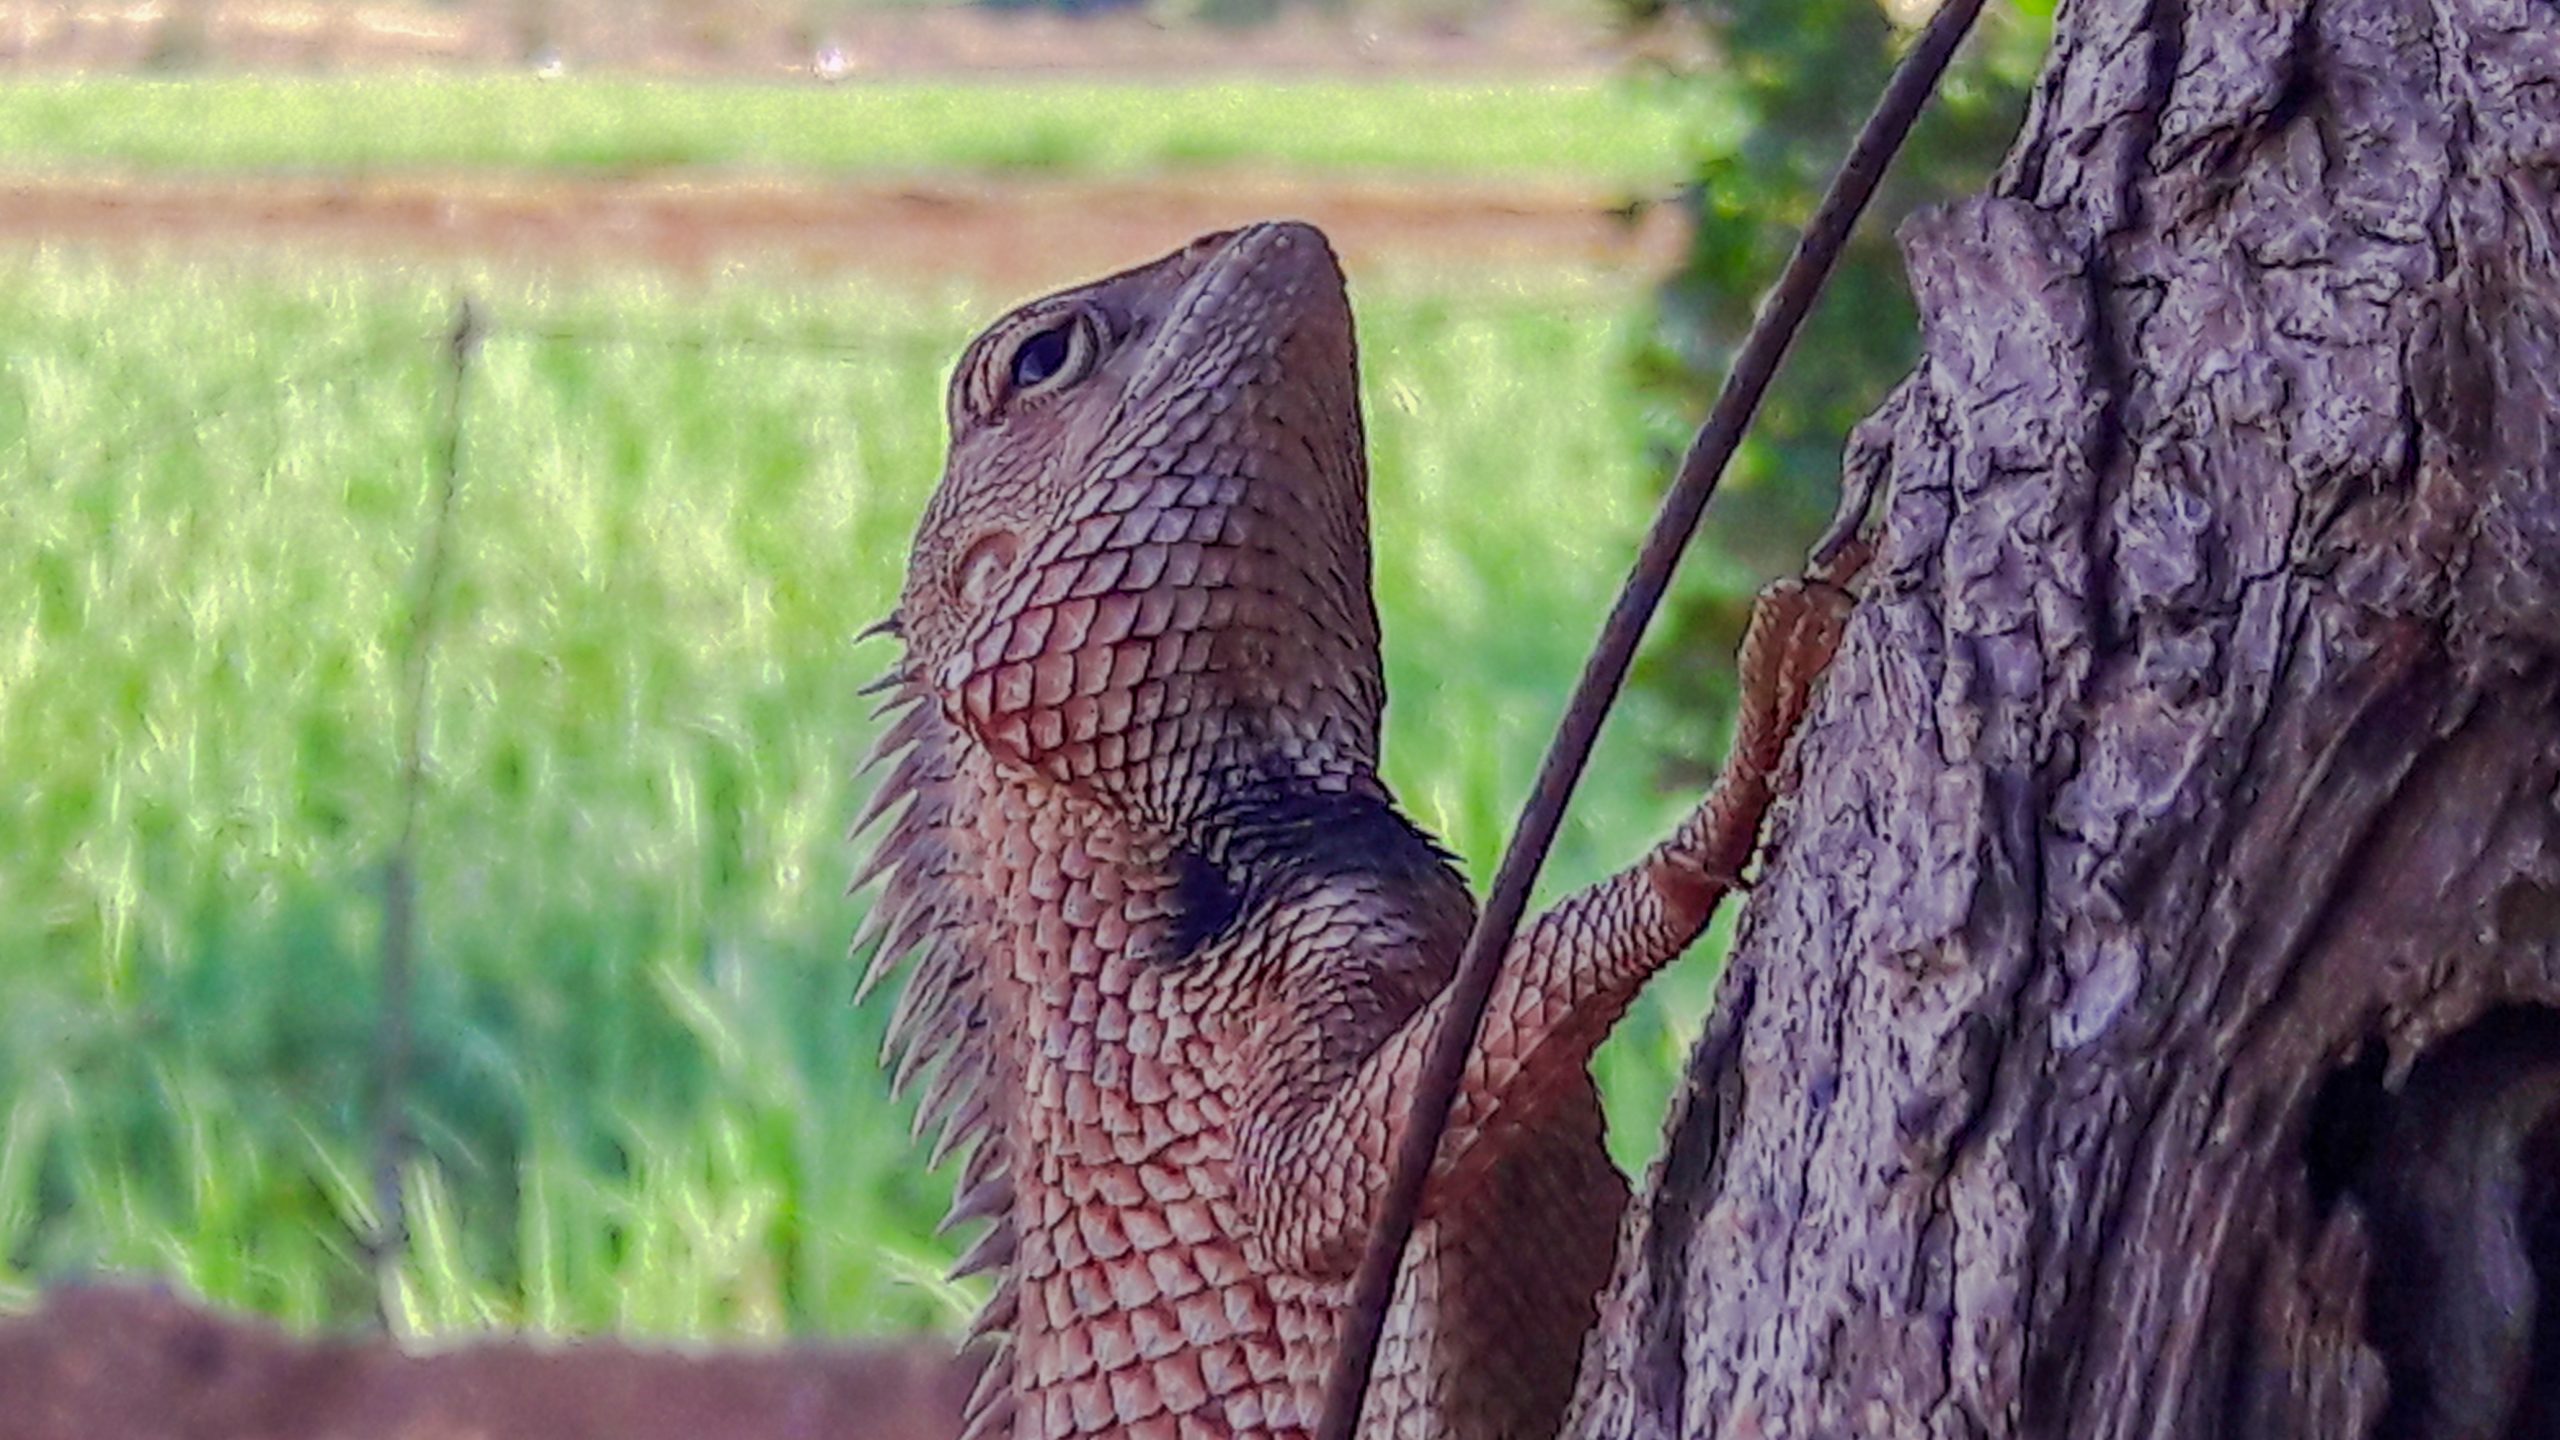 Garden lizard on a tree bark